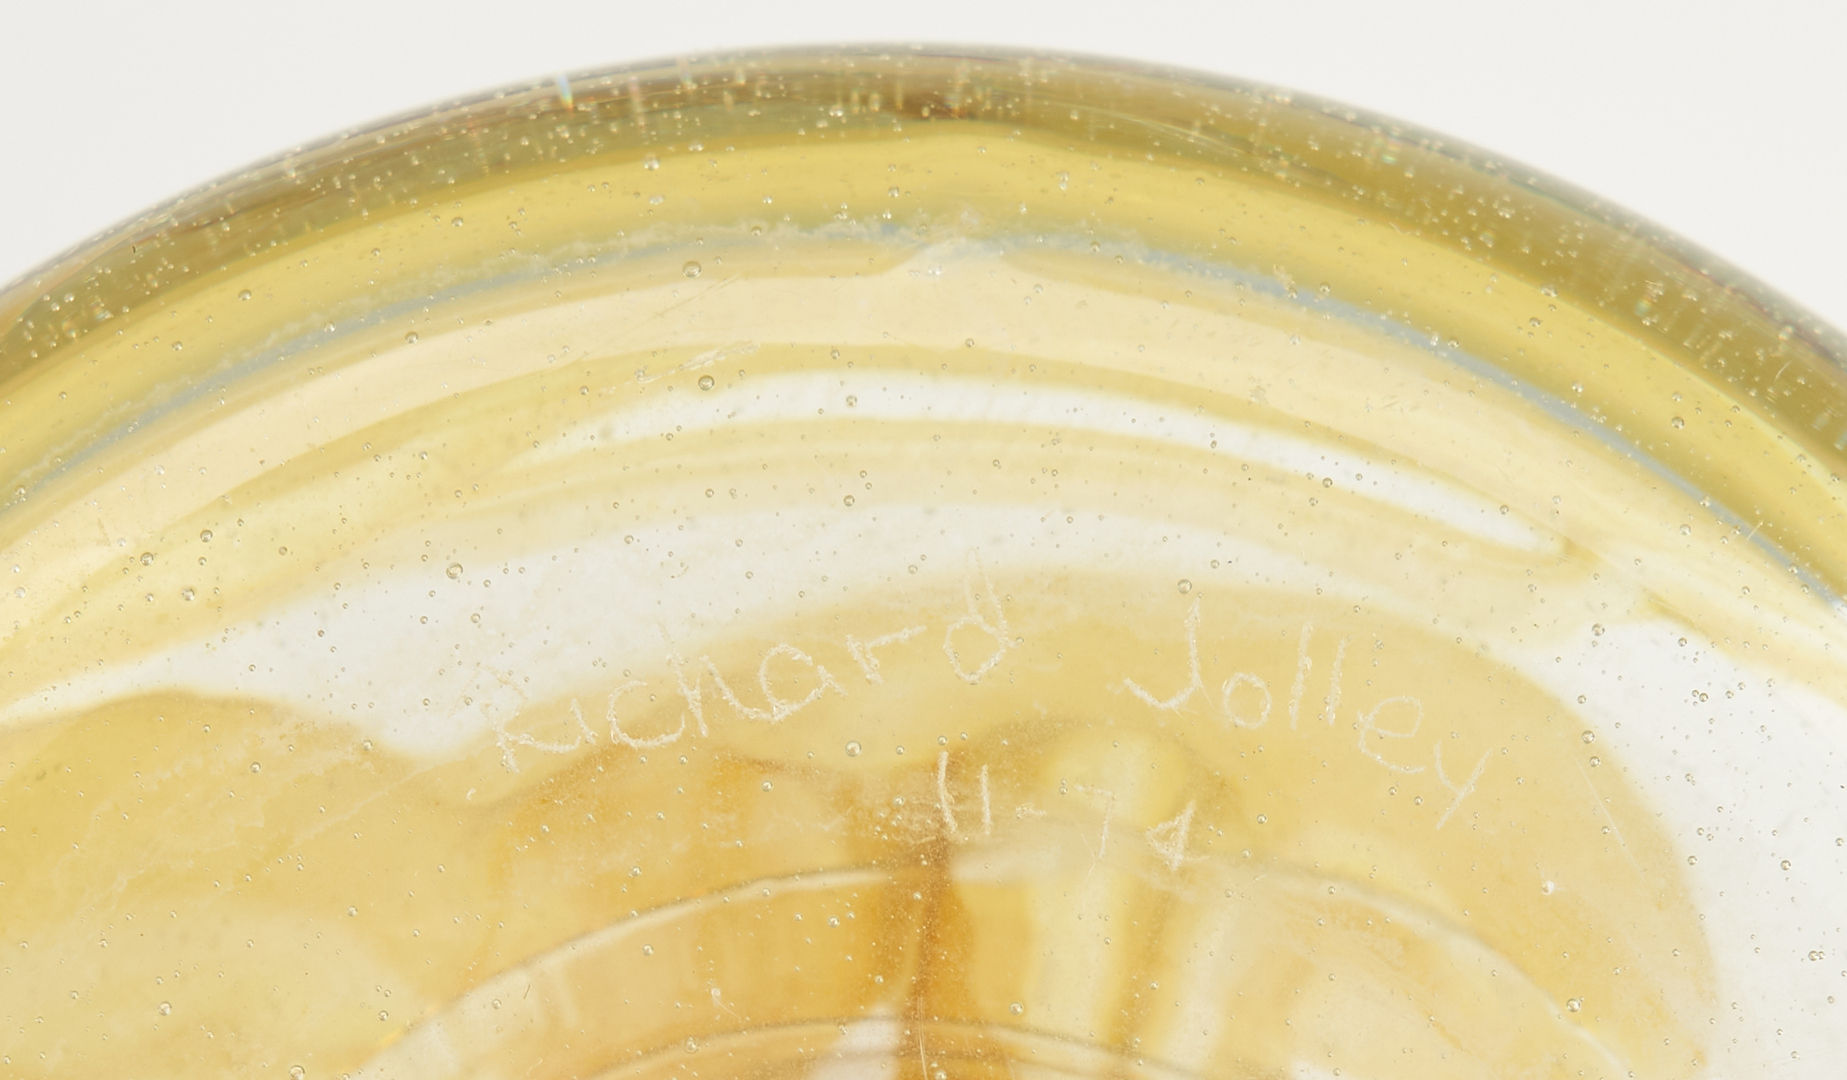 Lot 547: 2 Richard Jolley Art Glass Vases